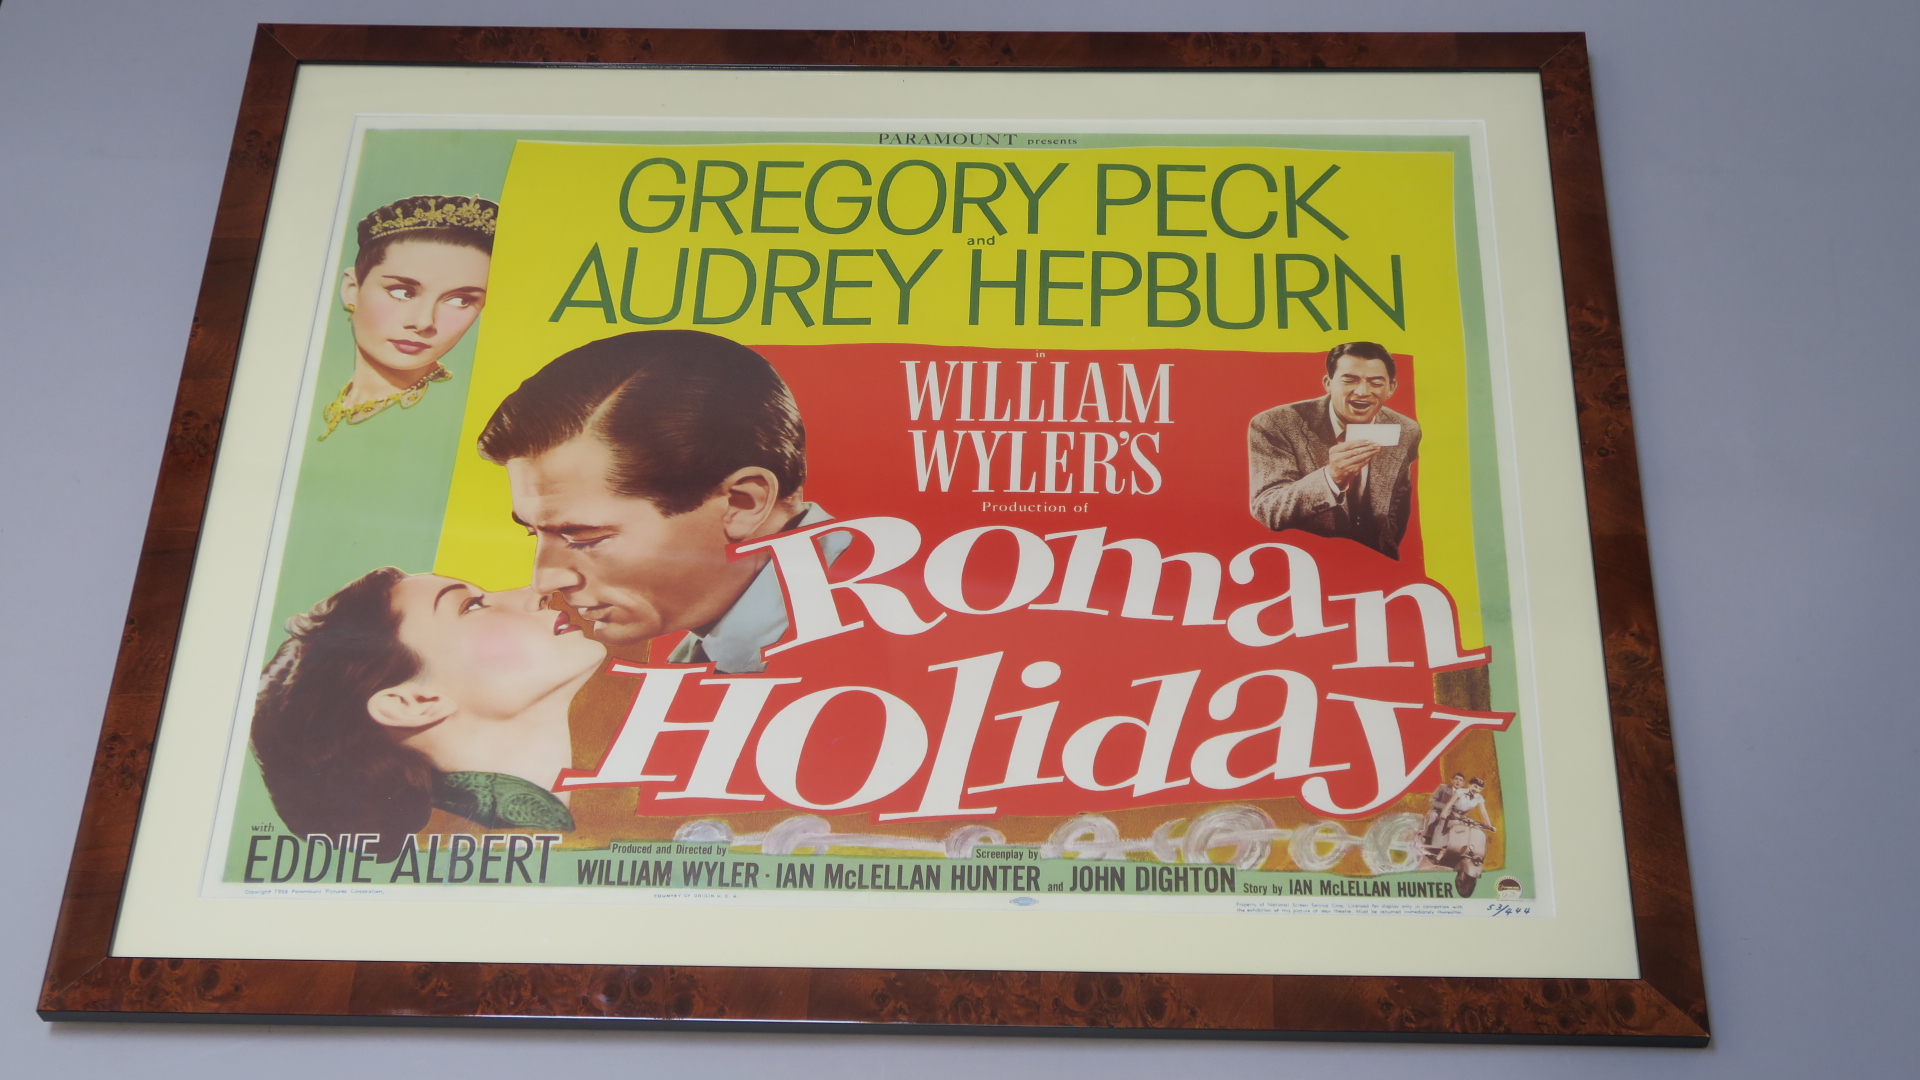 Roman Holiday (1953) Original US half sheet film poster starring Audrey Hepburn and Gregory Peck